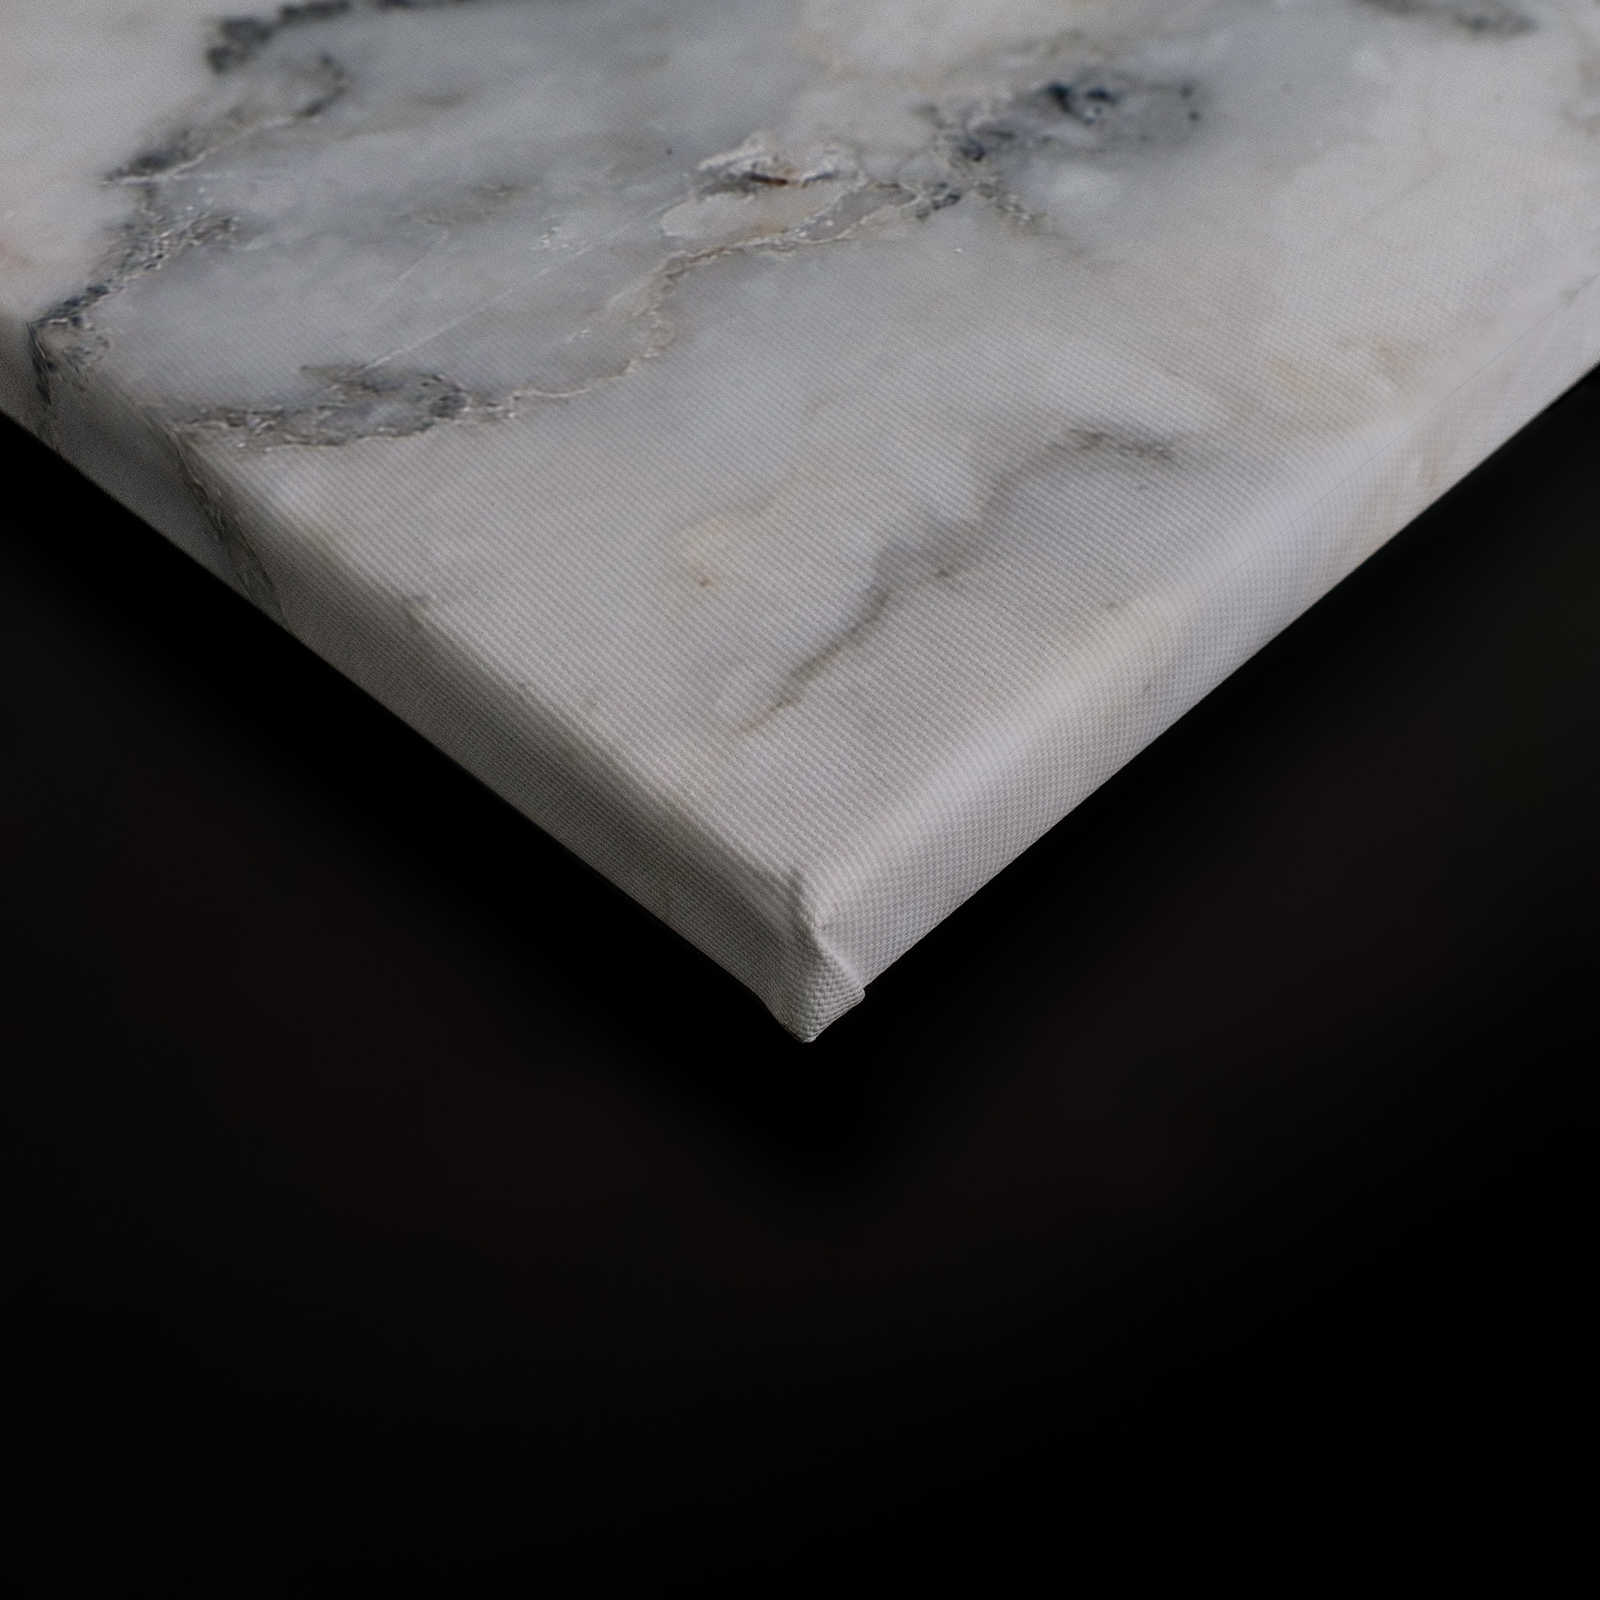             Leinwandbild realistischer & großflächiger Marmor – 0,90 m x 0,60 m
        